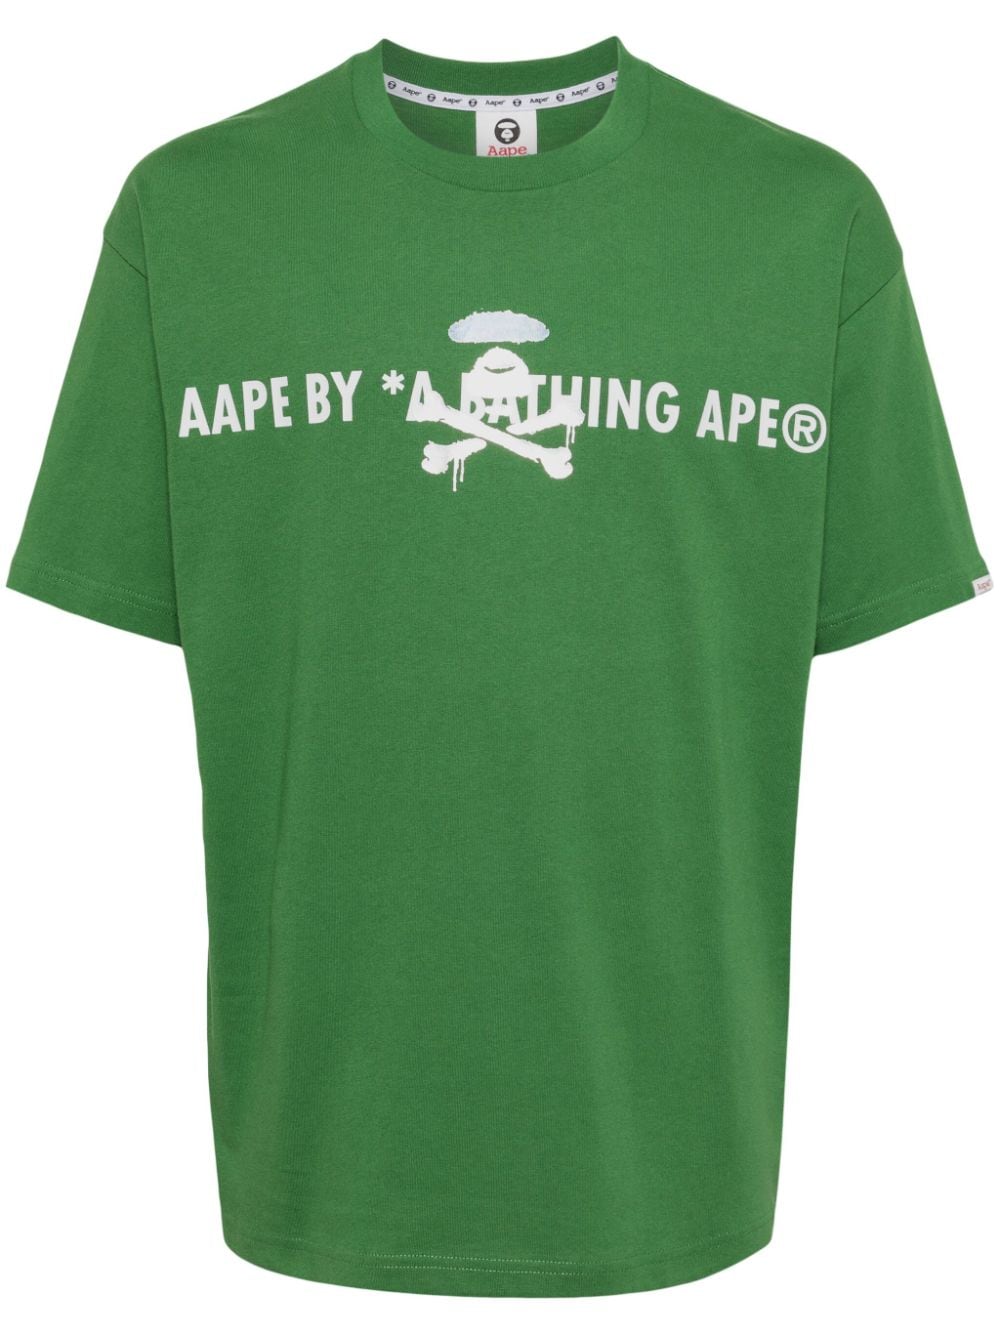 AAPE BY *A BATHING APE® logo-print cotton T-shirt - Green von AAPE BY *A BATHING APE®